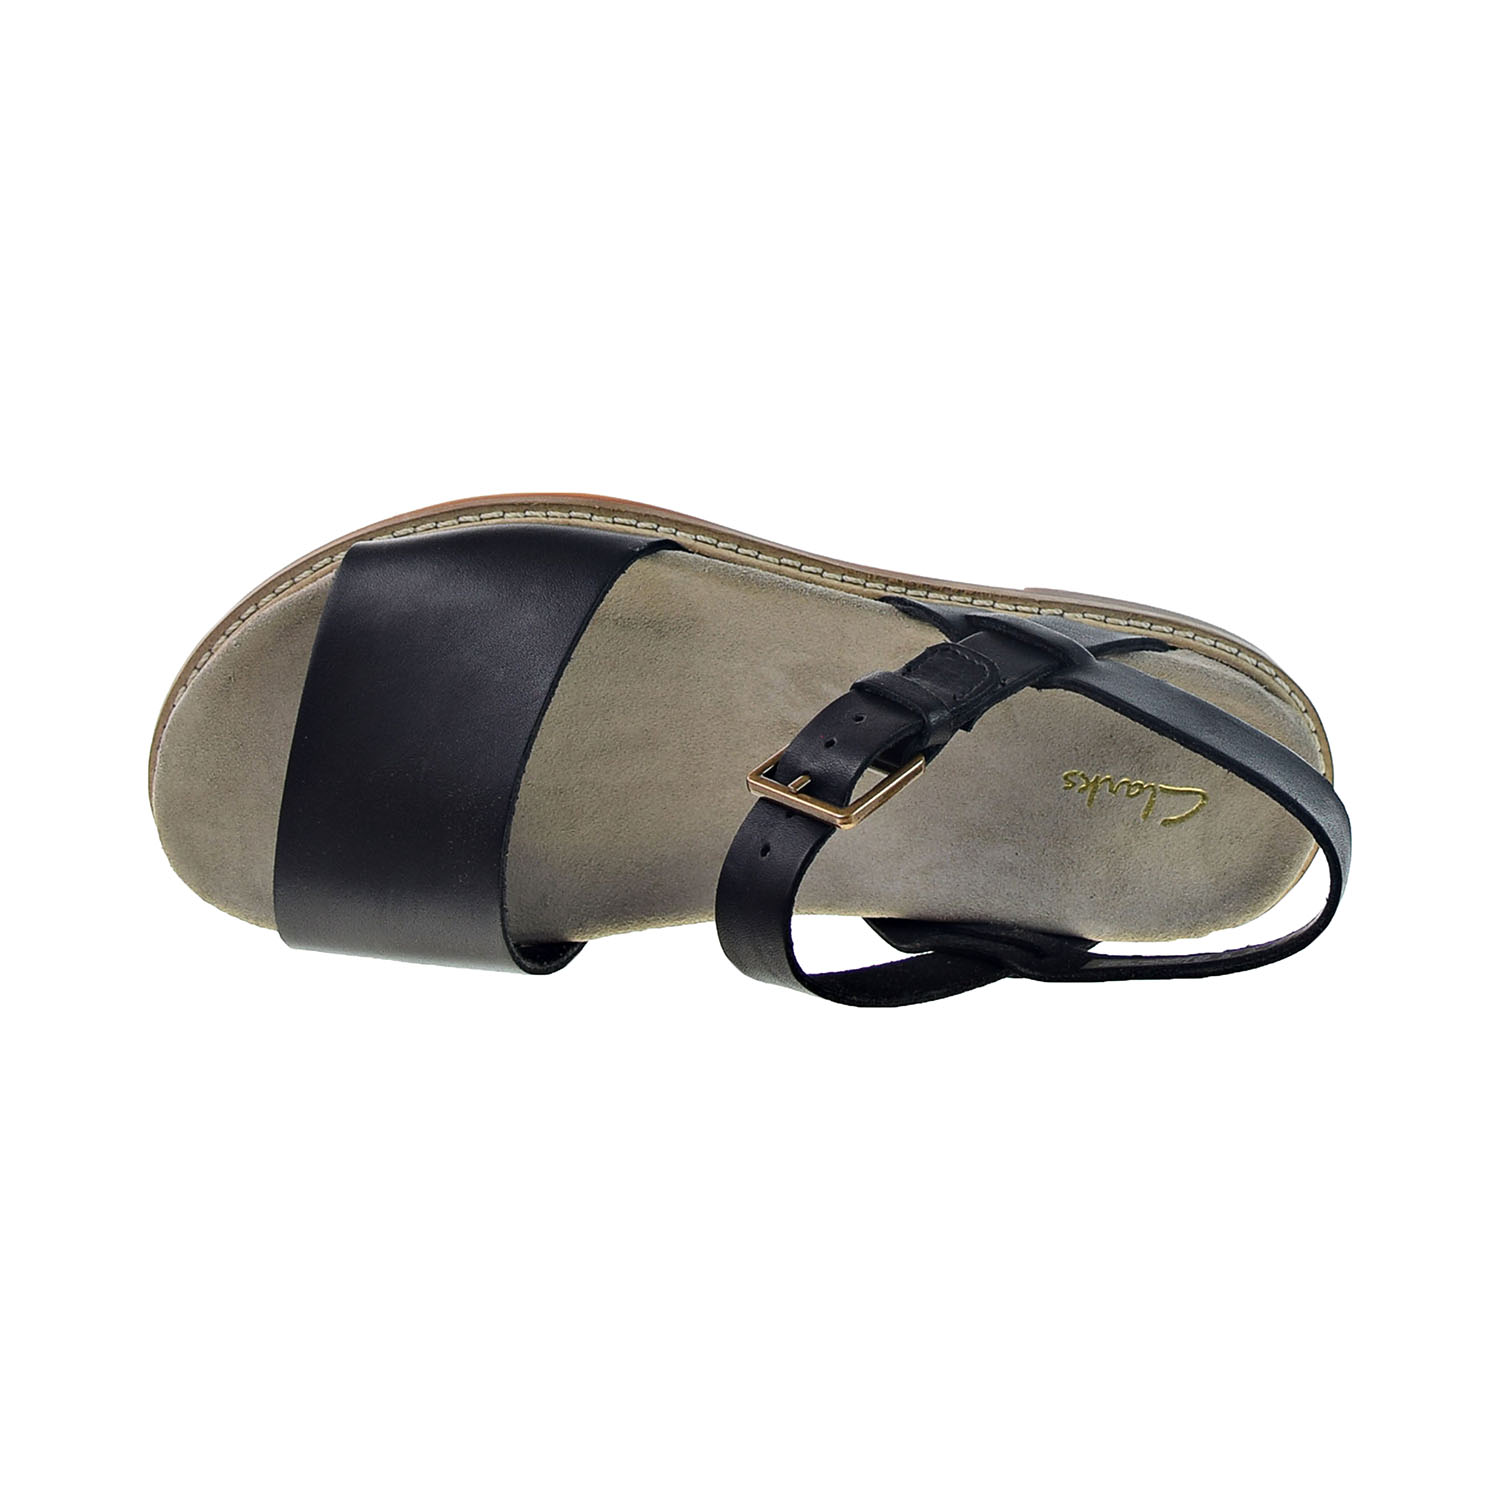 Clarks Corsio Strap Women's Flat Sandals Black Leather 26152041